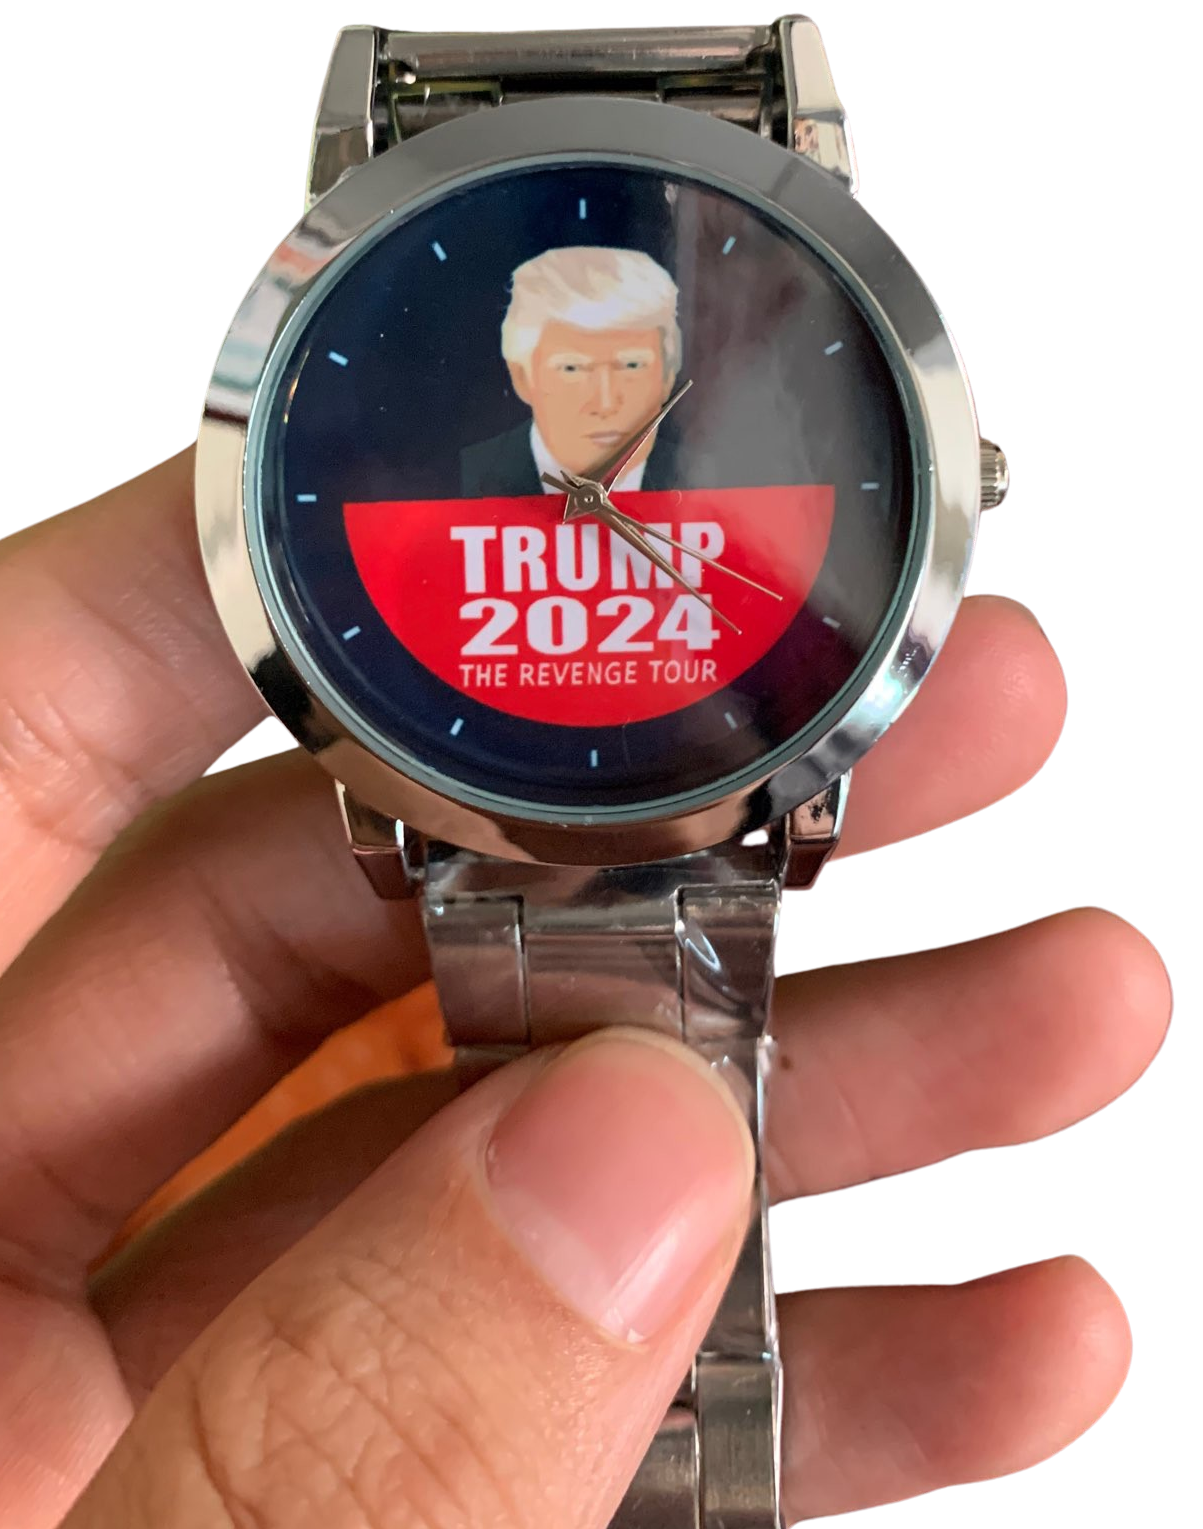 FREE Trump 2024 "The Revenge Tour" Wrist Watch Giveaway!